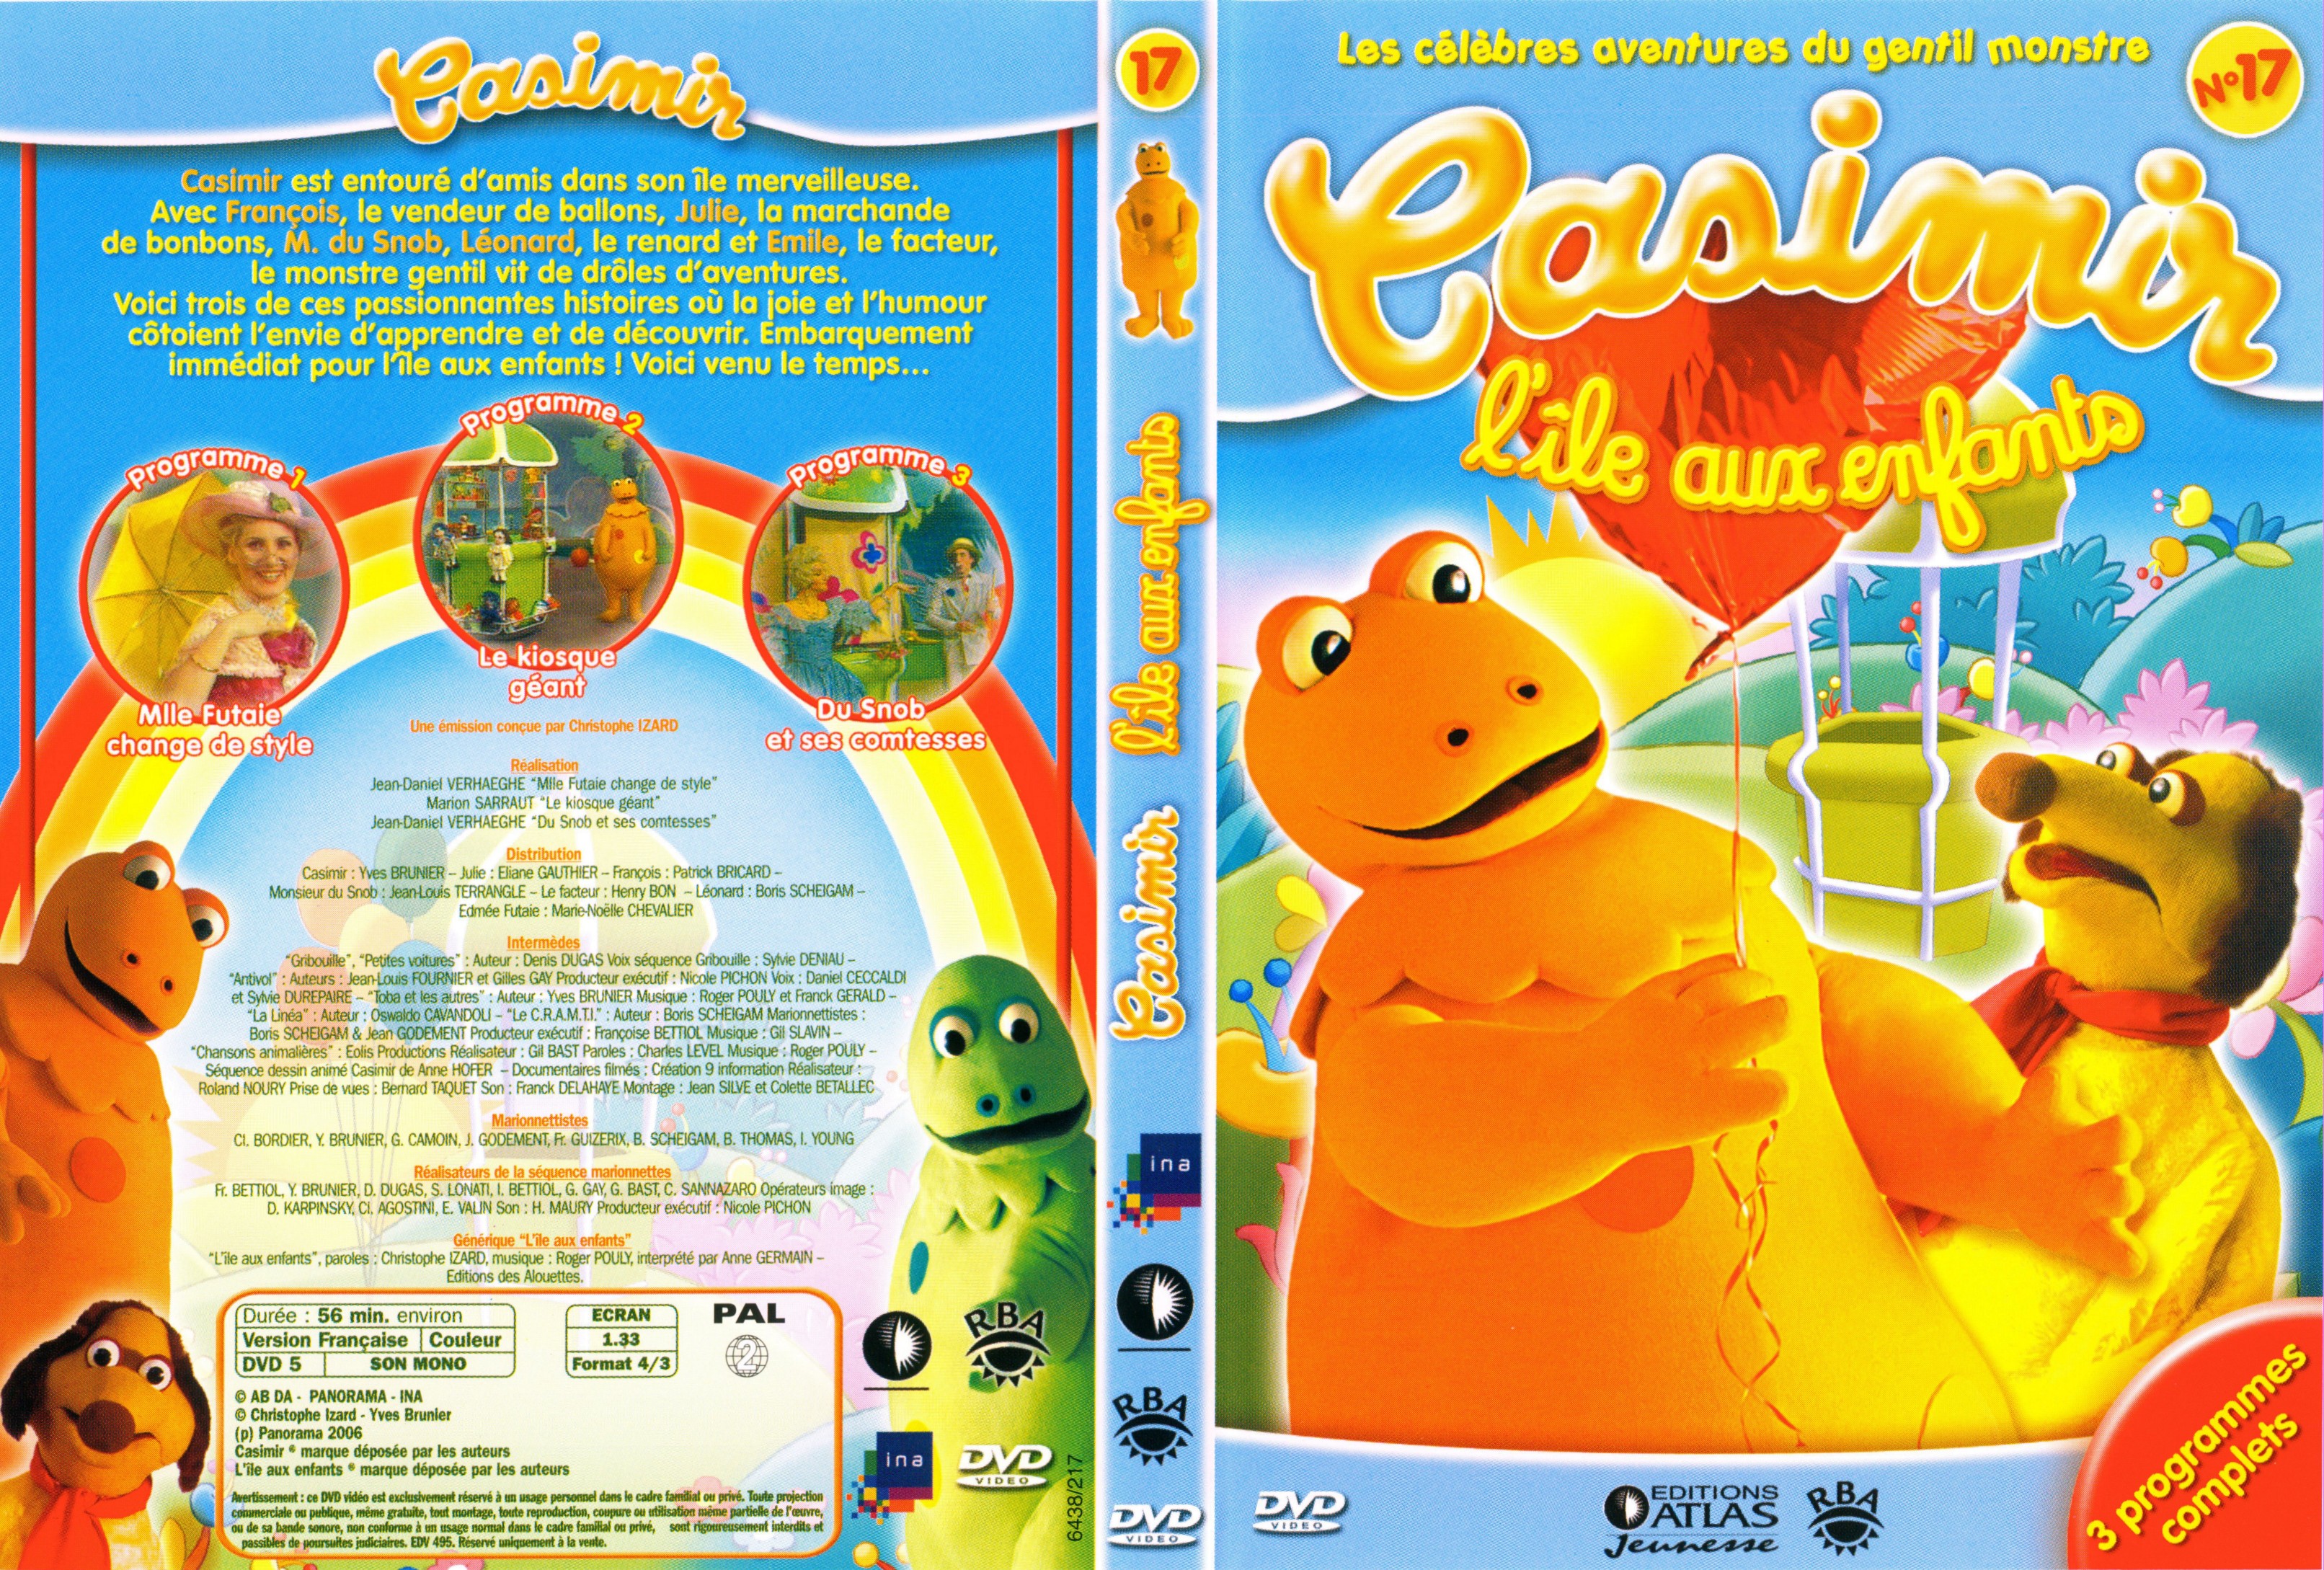 Jaquette DVD Casimir vol 17